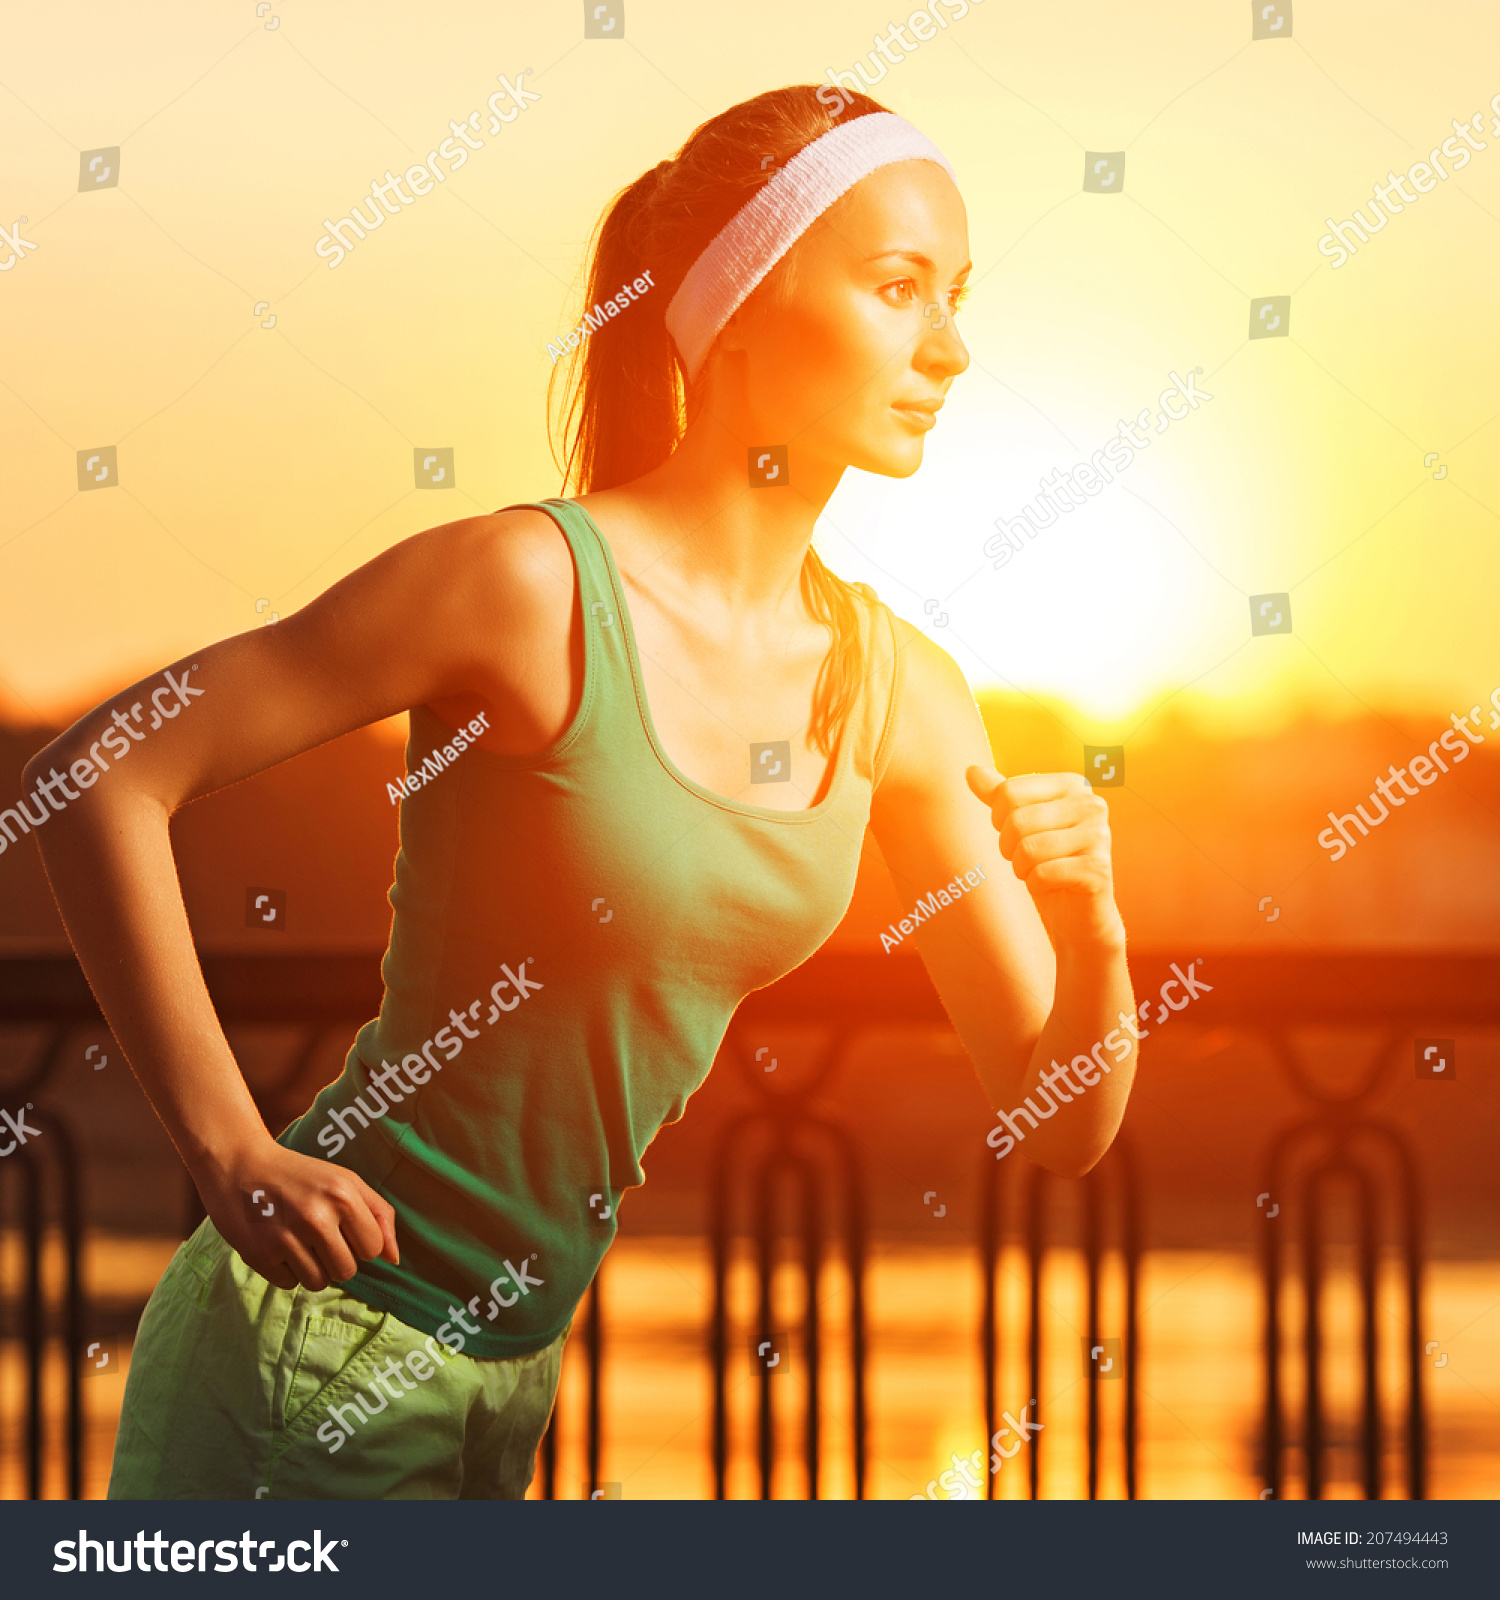 Running Woman Runner Jogging Sunny Bright Stock Photo 207494443